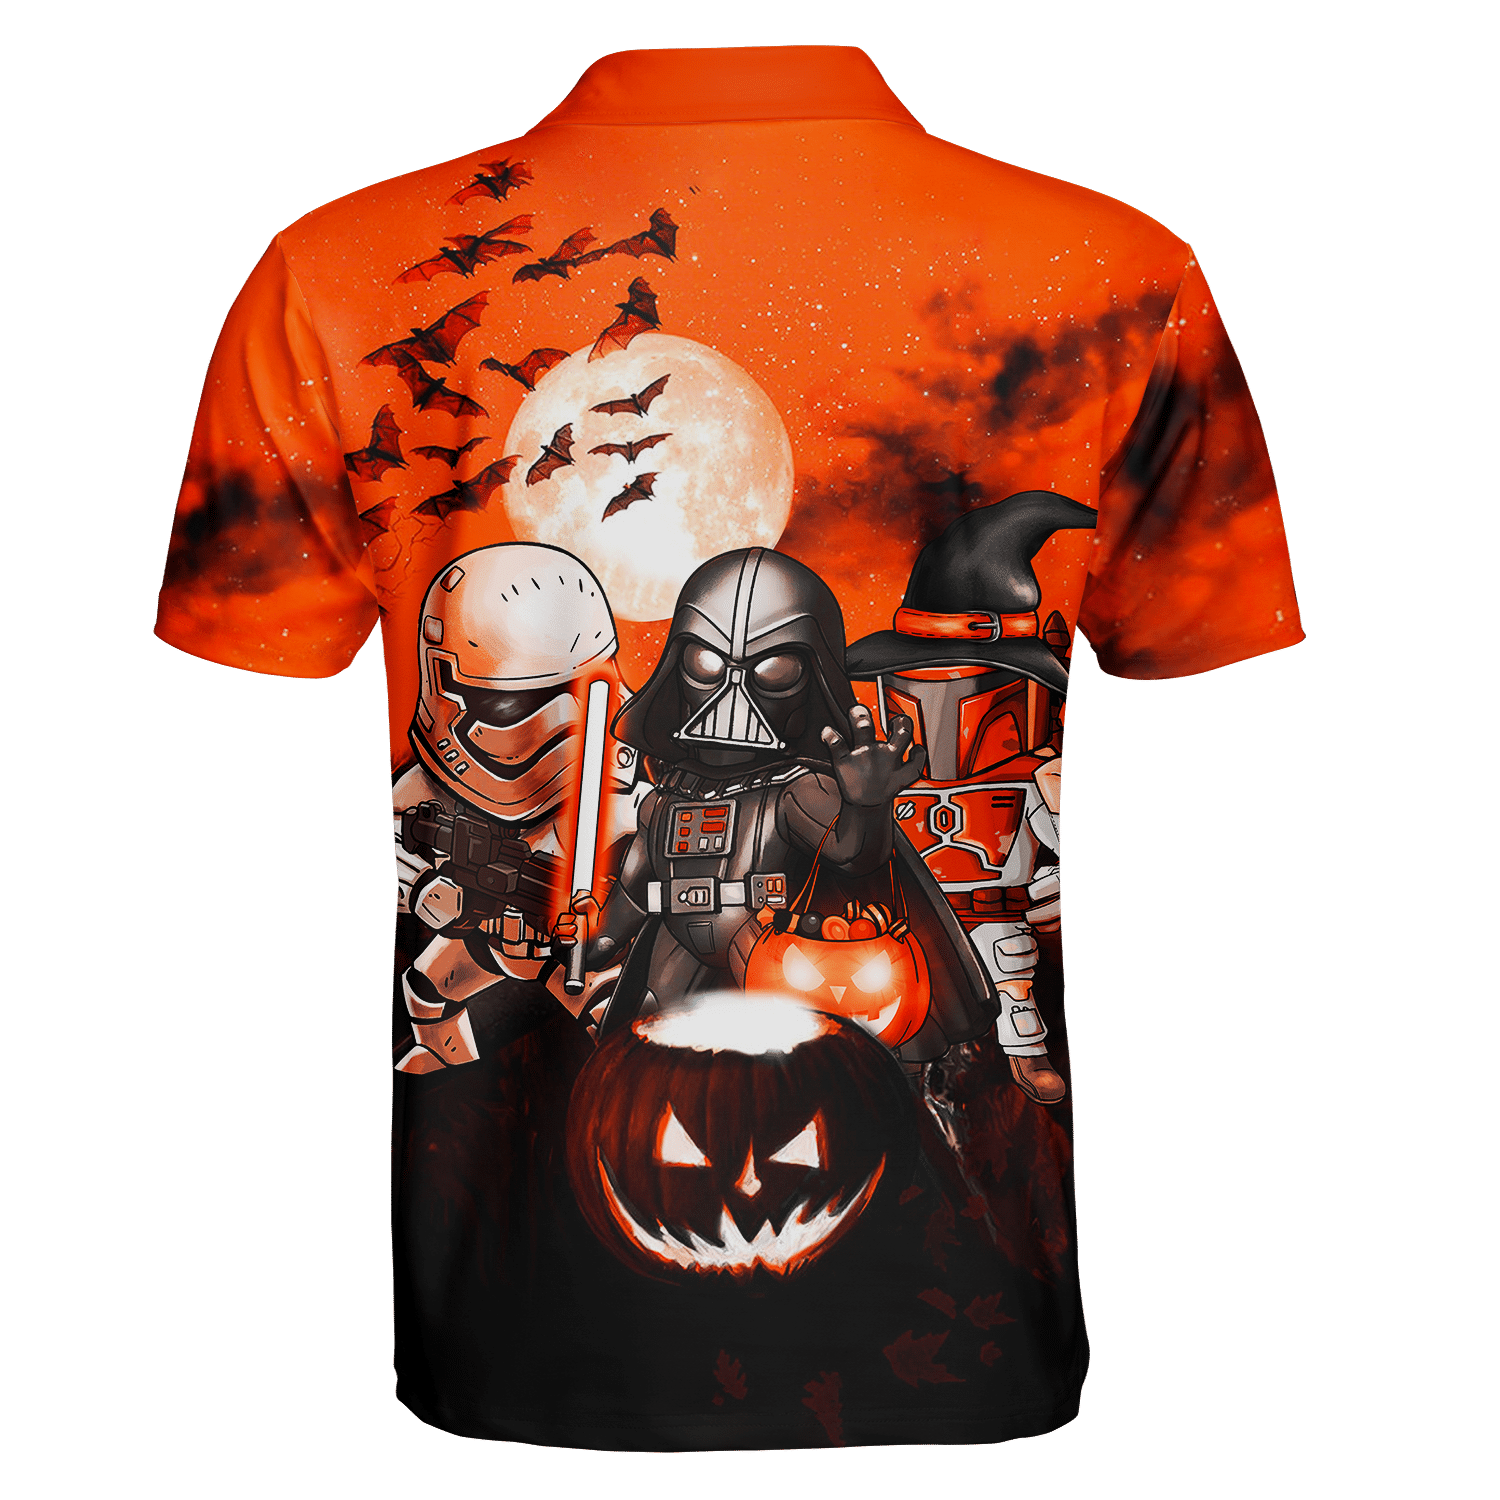 Darth Vader Boba Fett Storm Trooper Halloween shirt and hoodie 7